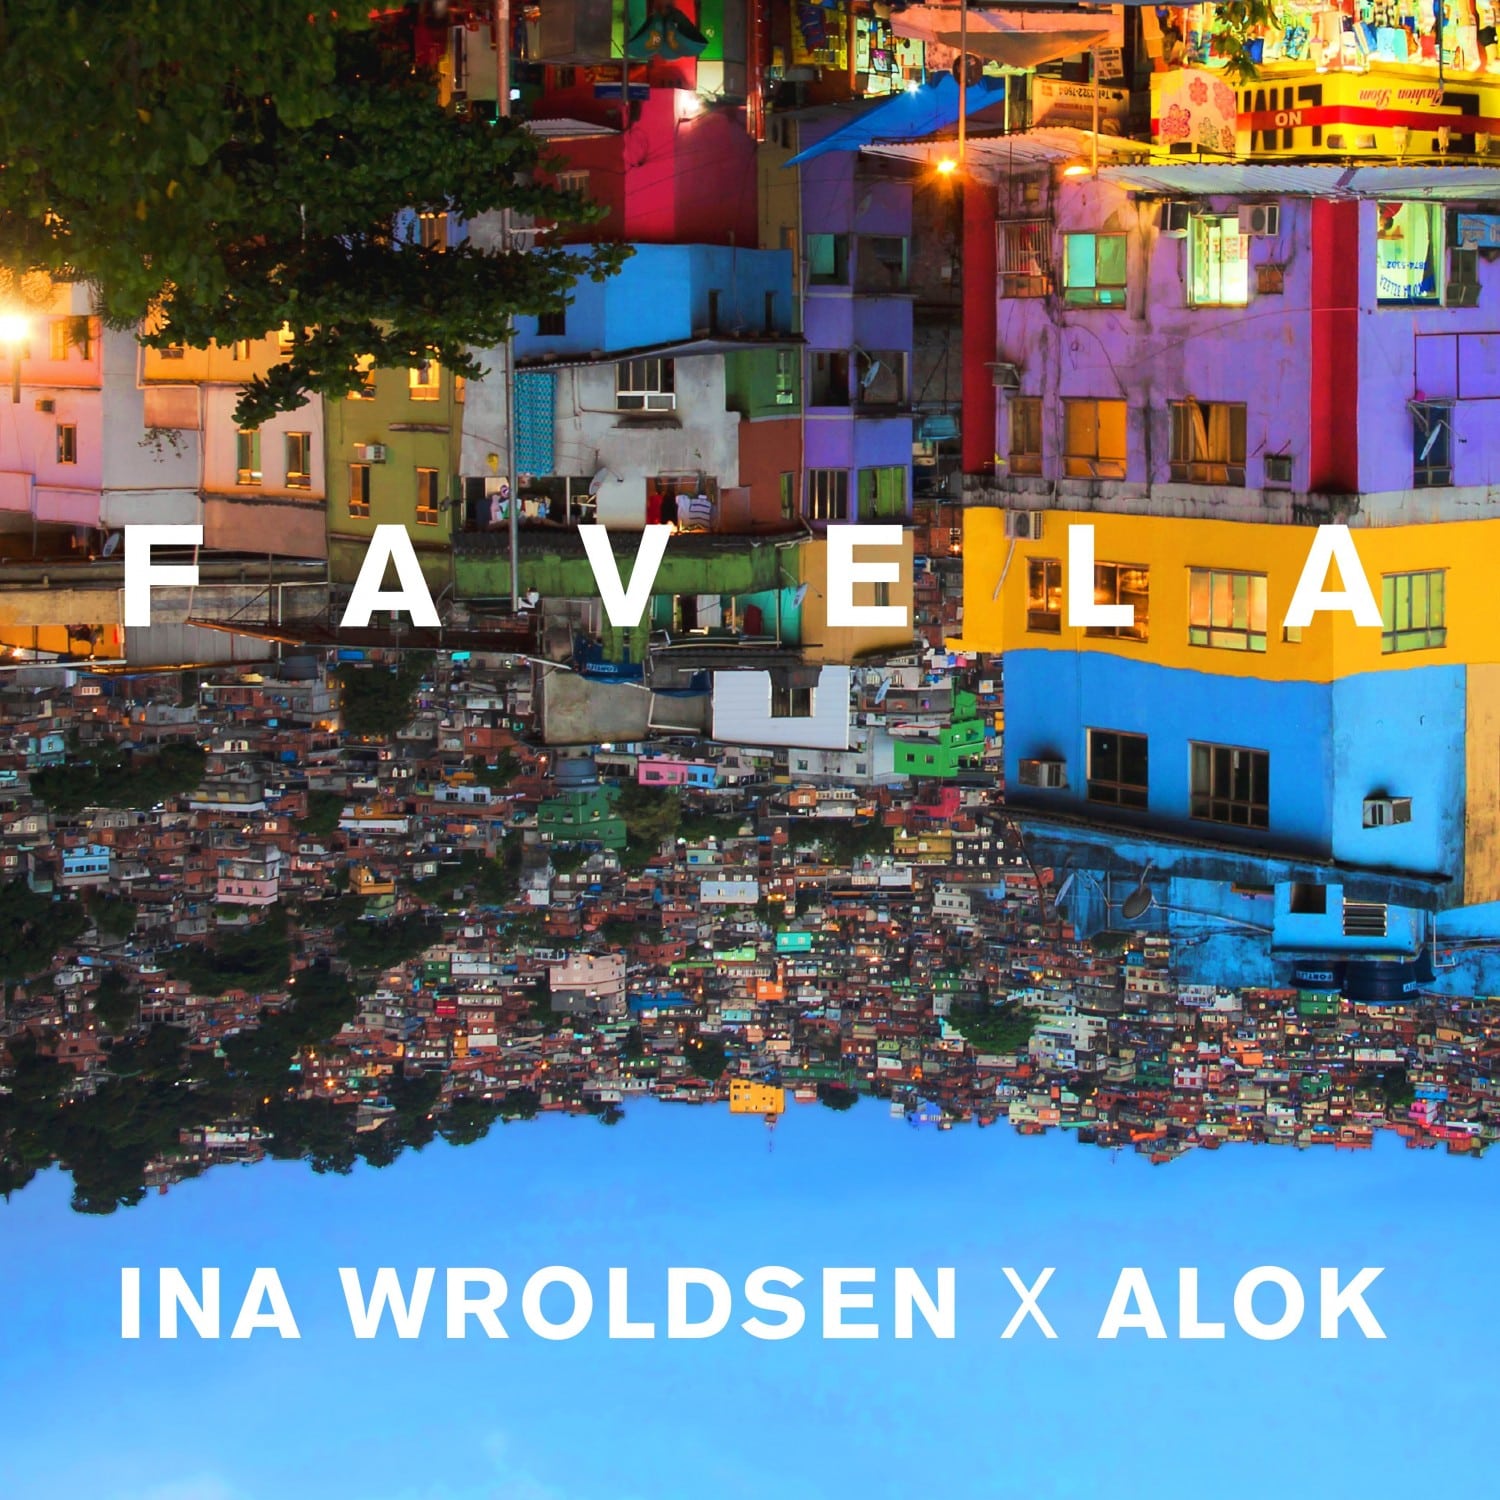 EDM Vocalist Ina Wroldsen Drops Heartfelt New Single "Favela" with Alok